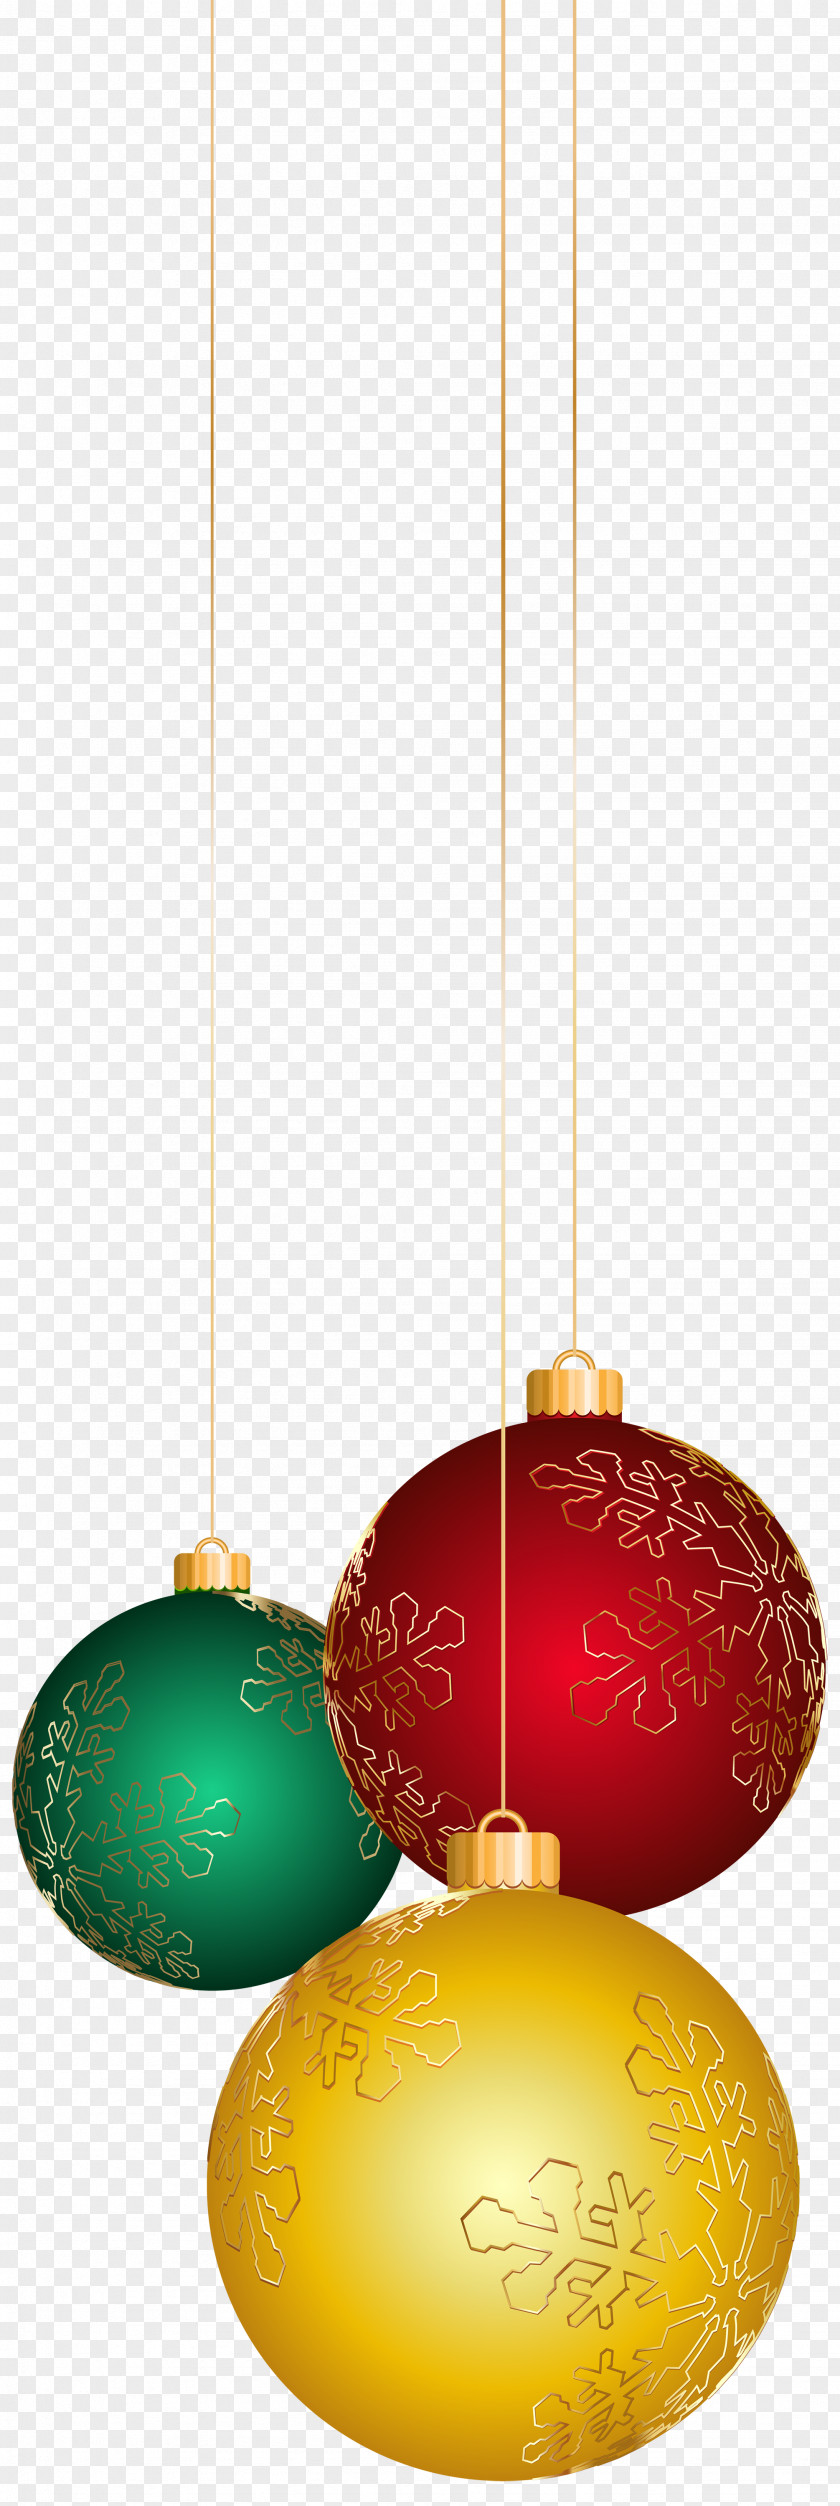 Christmas Balls Clip Art Image Lossless Compression File Formats Computer PNG